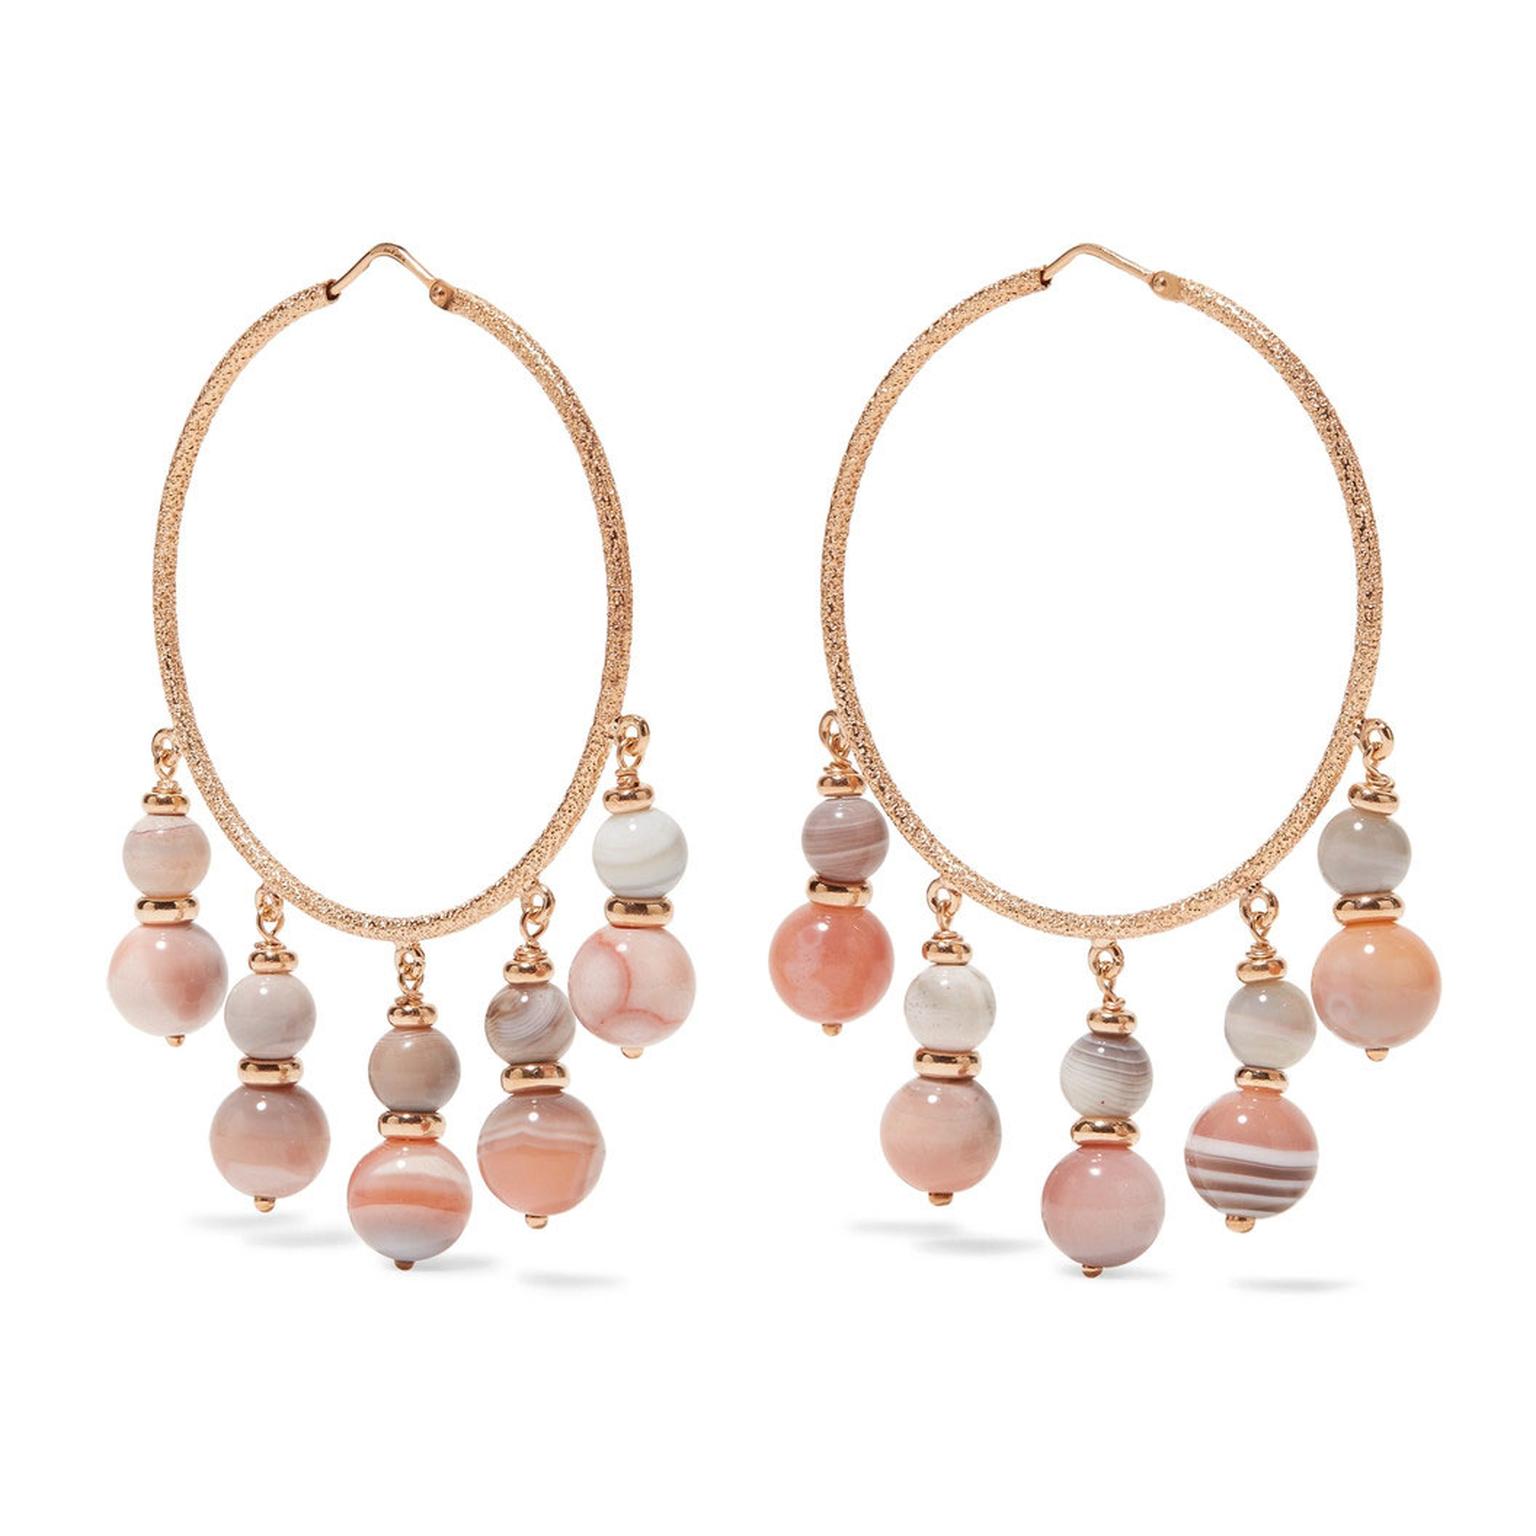 Carolina Bucci recharmed rose gold and agate hoop earrings